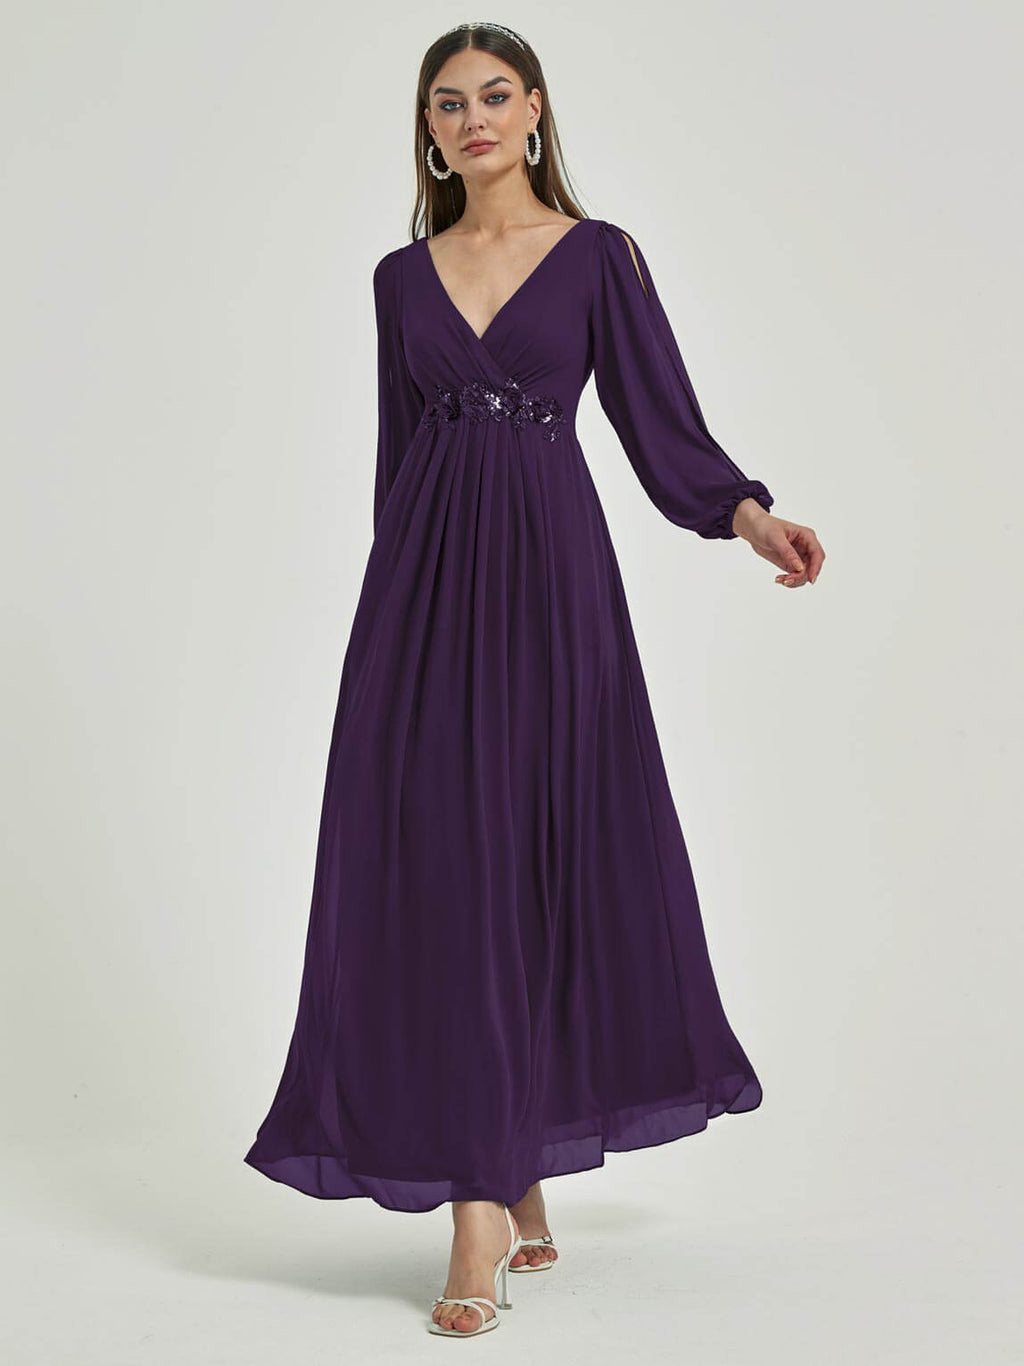 NZ Bridal DarkPurple Long Sleeves Chiffon Maxi bridesmaid dresses 00461ep Liv a